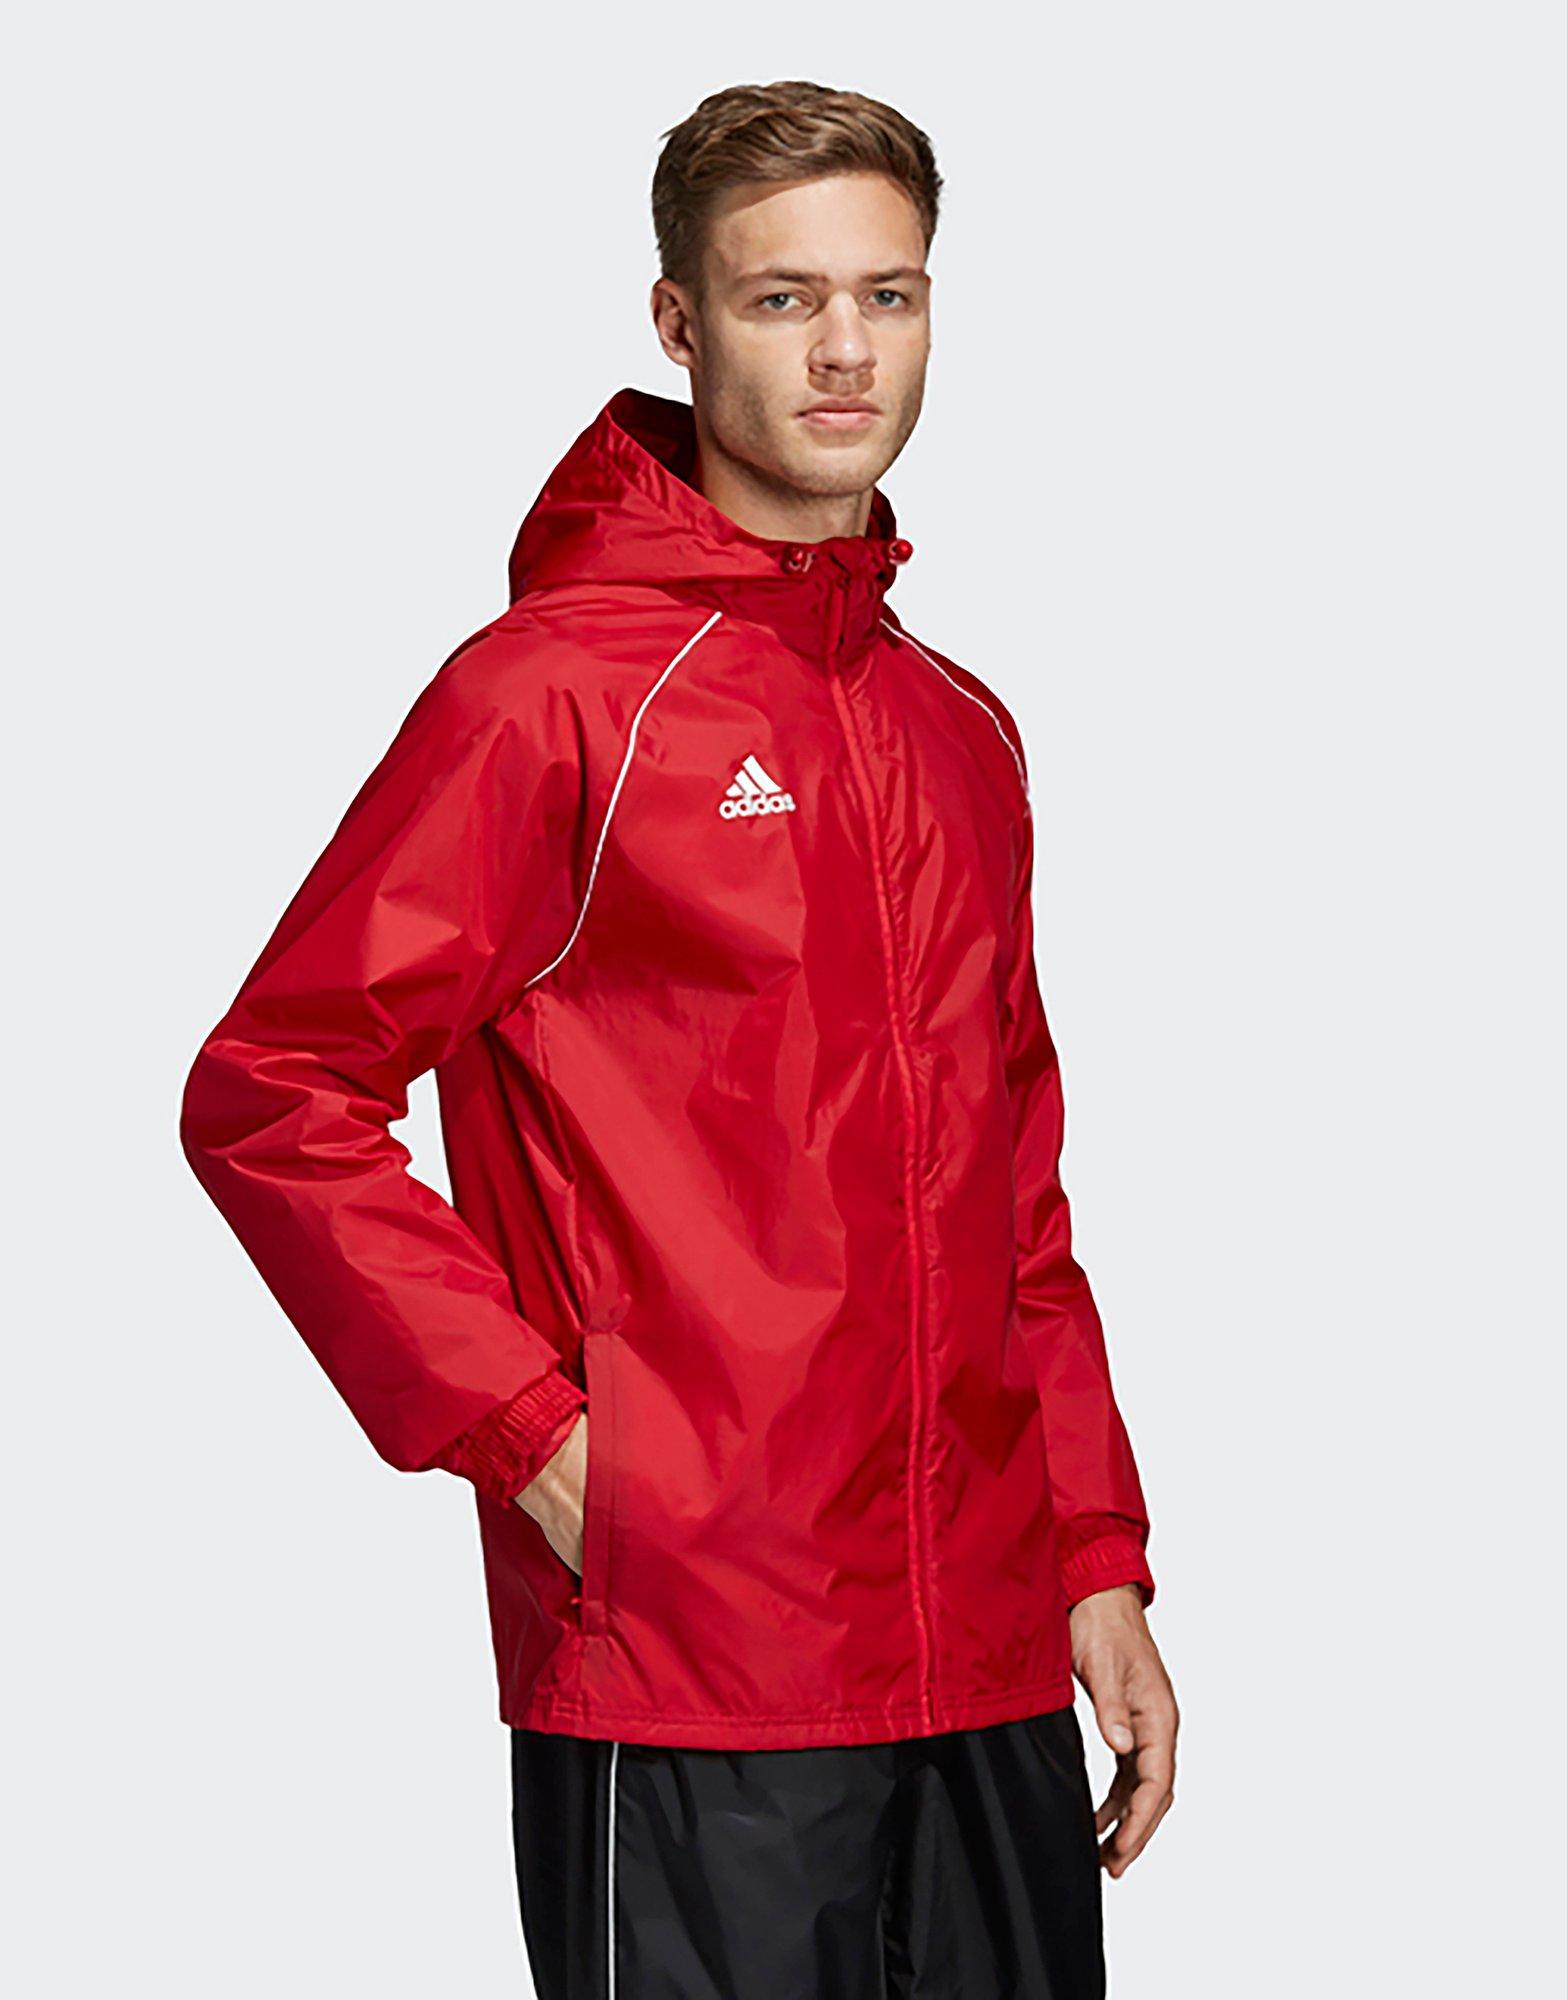 adidas men's core 18 rain jacket